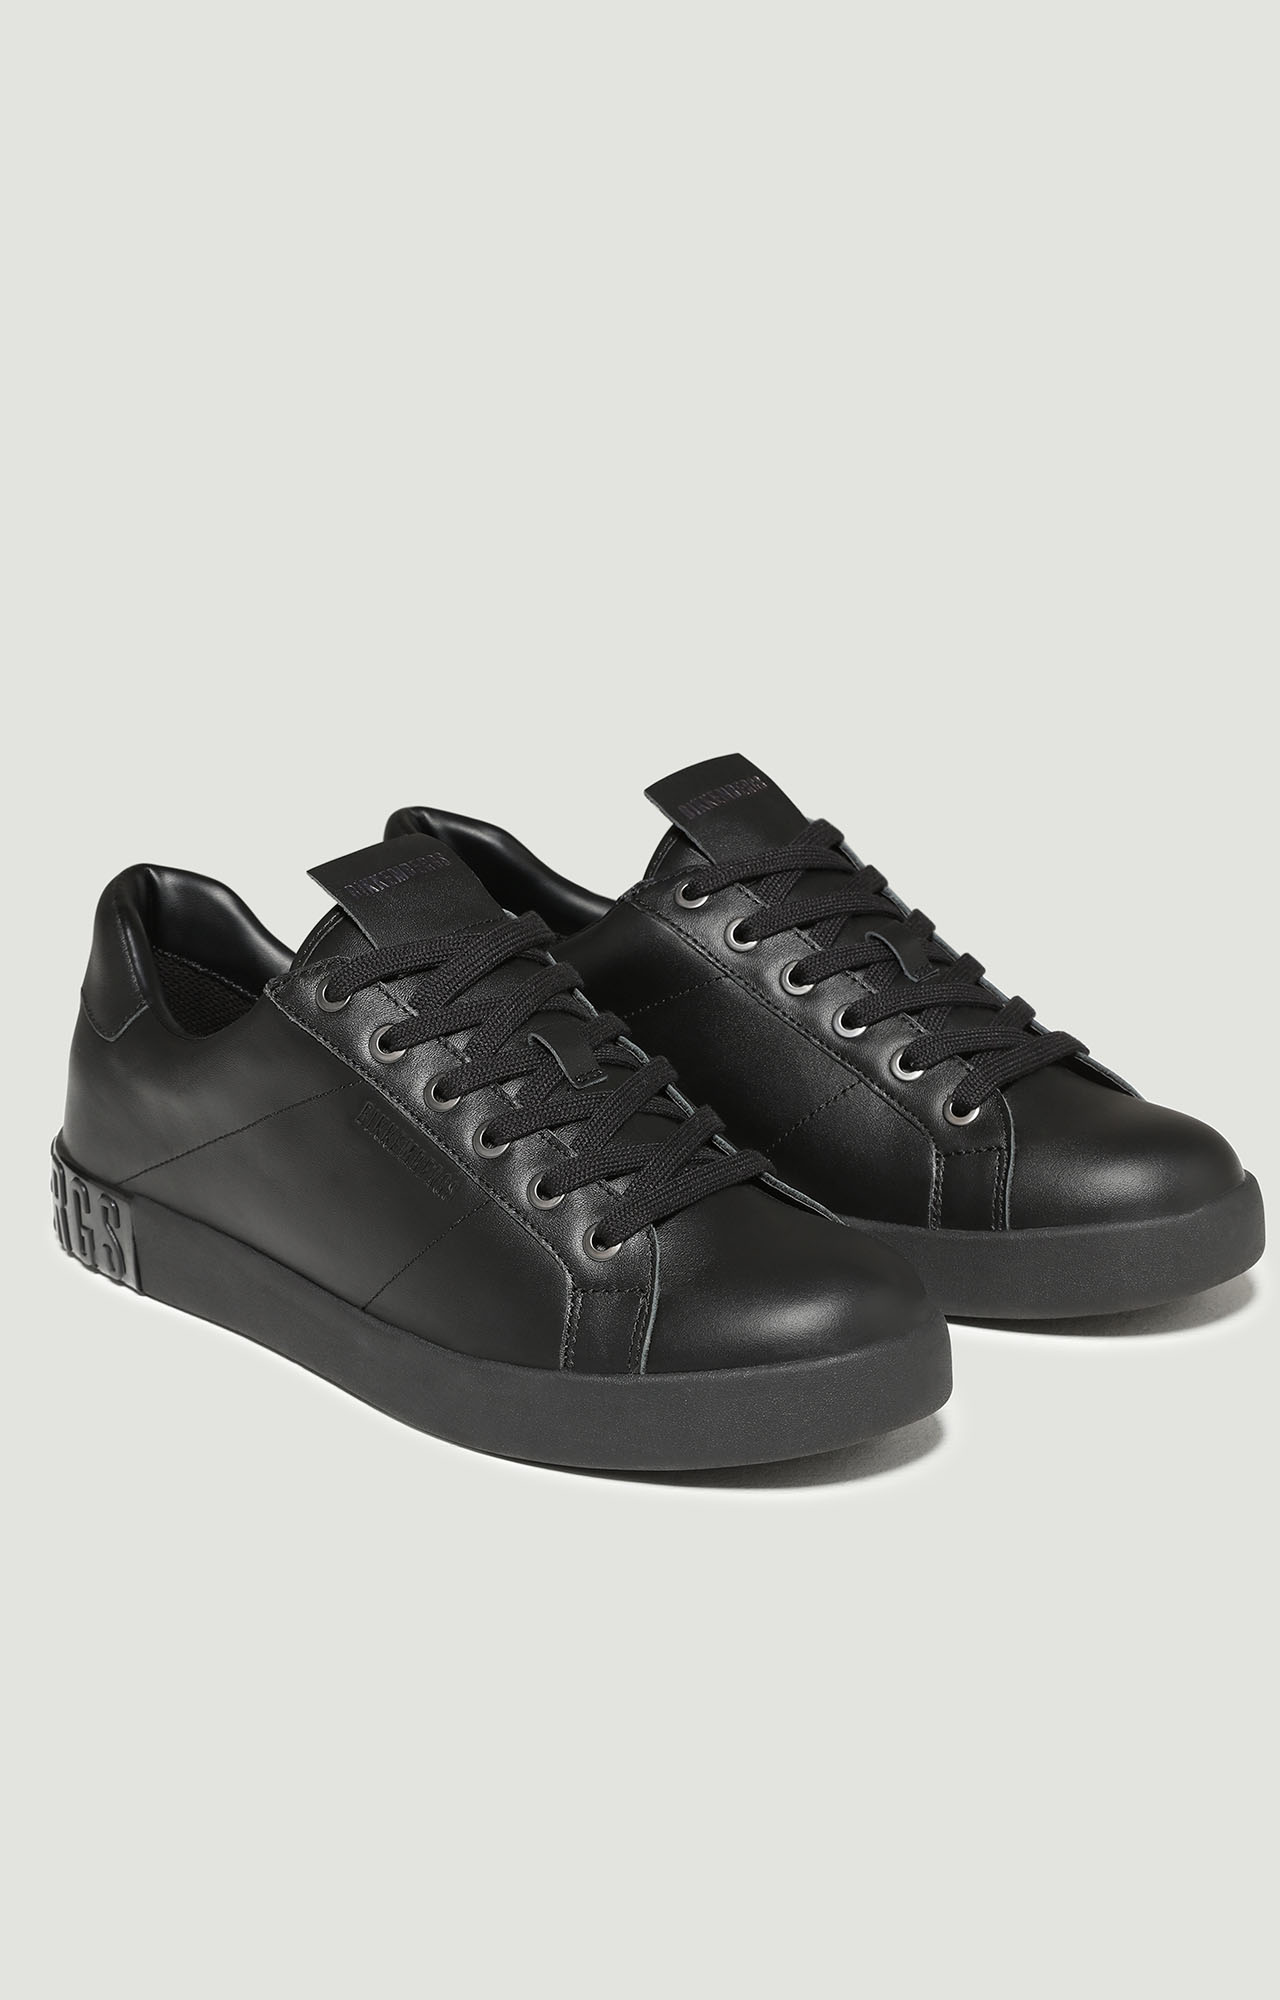 Vrijstelling de jouwe orgaan Shieran men's sneakers with patent leather details | BLACK | Bikkembergs